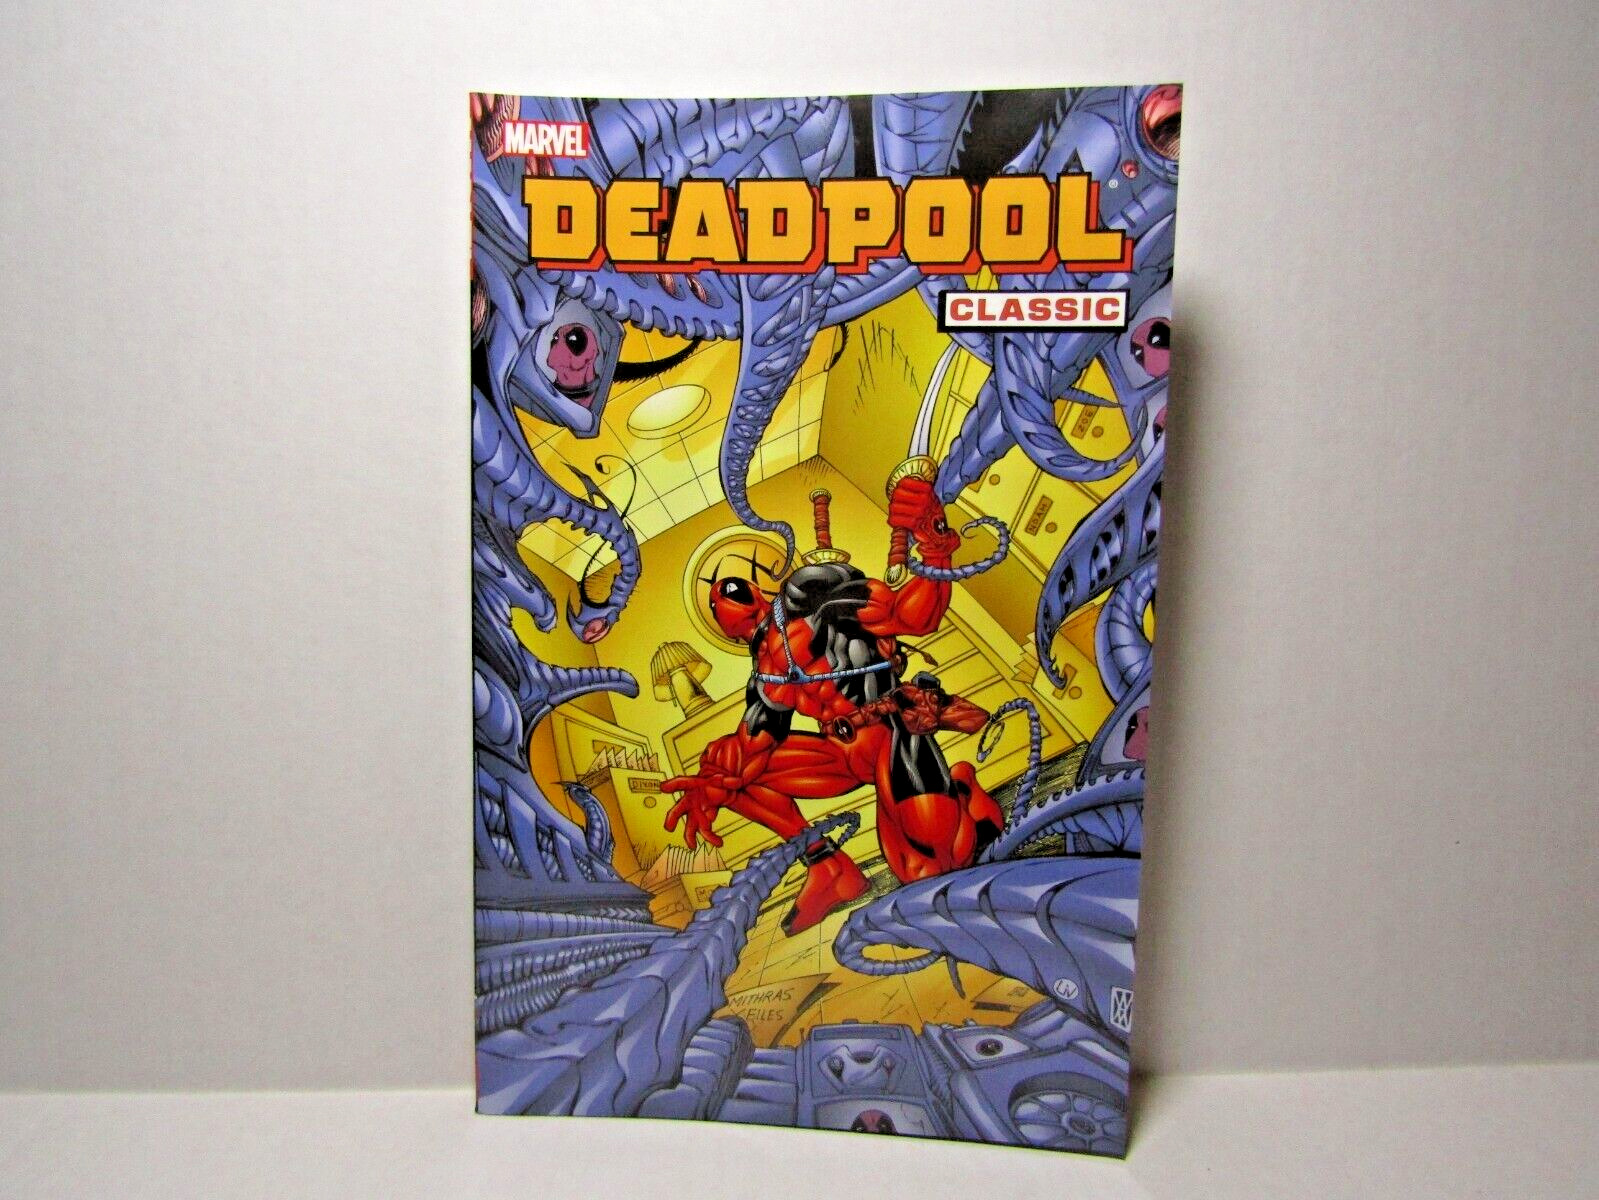 Marvel Deadpool Classic Vol. 4 Trade Paperback Graphic Novel - NEW